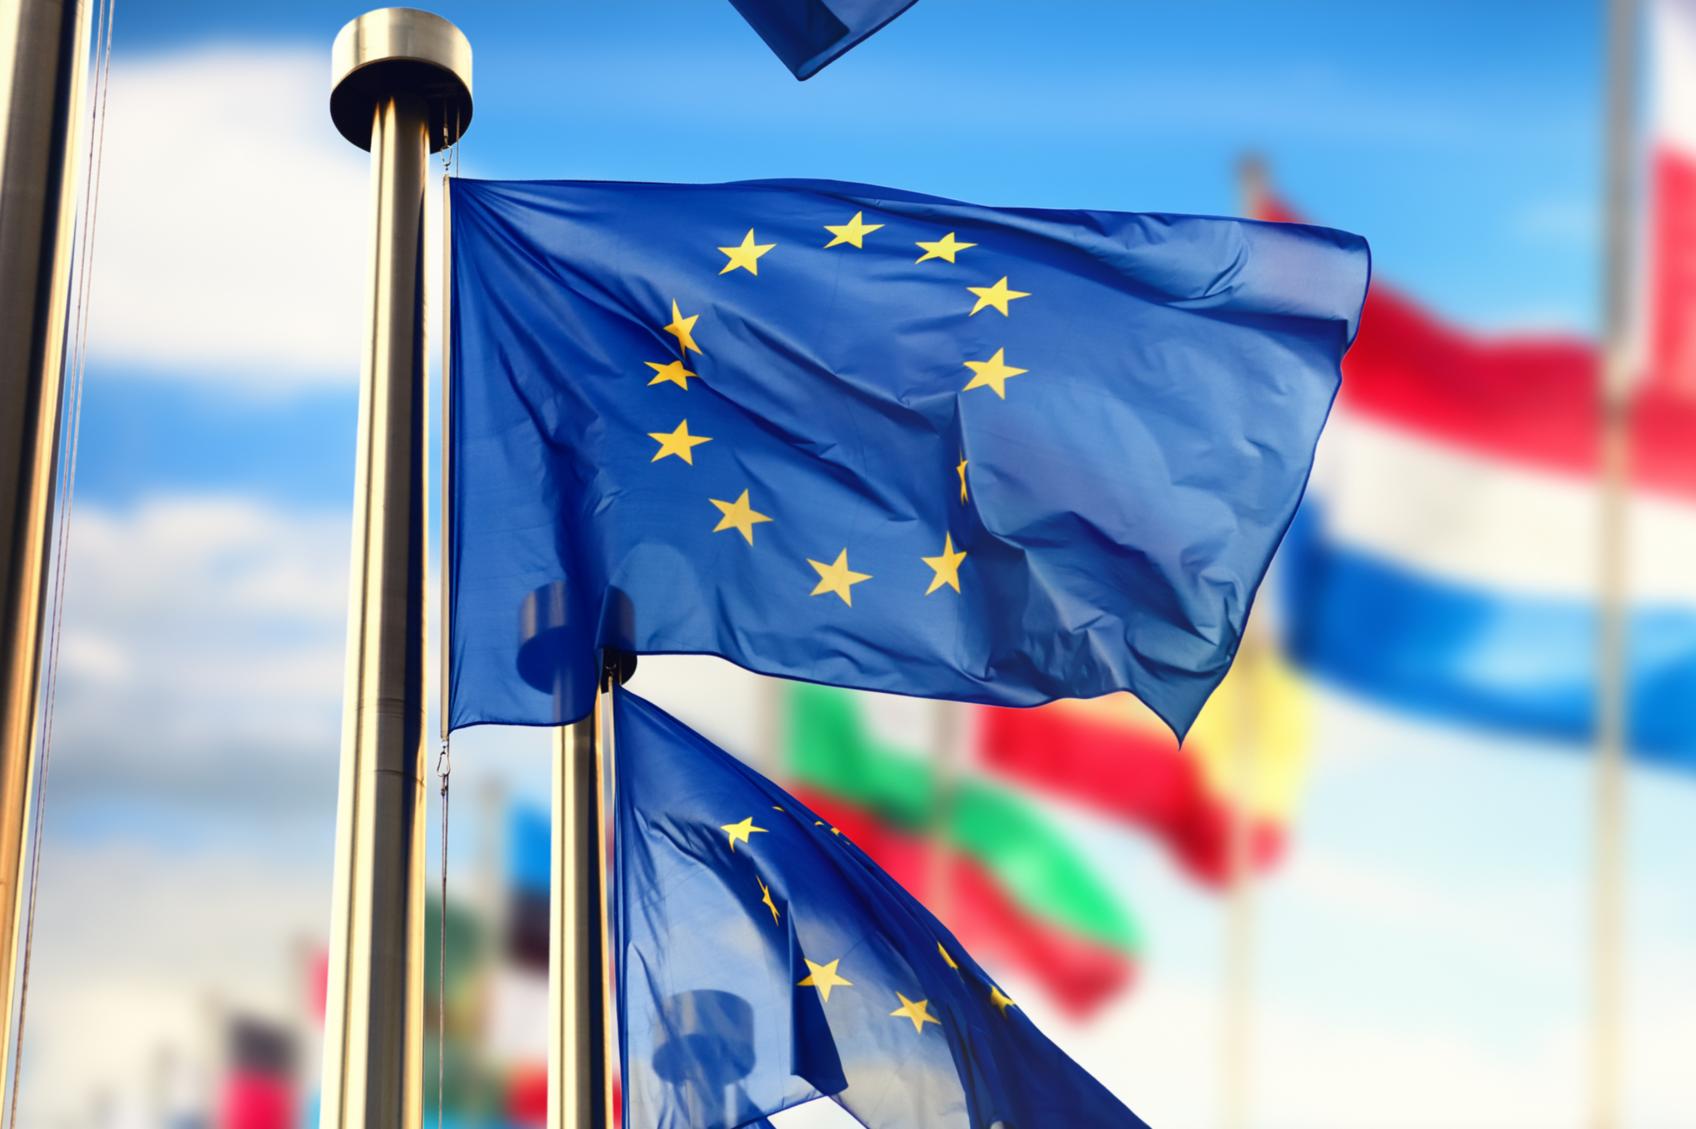 bandiera_europea